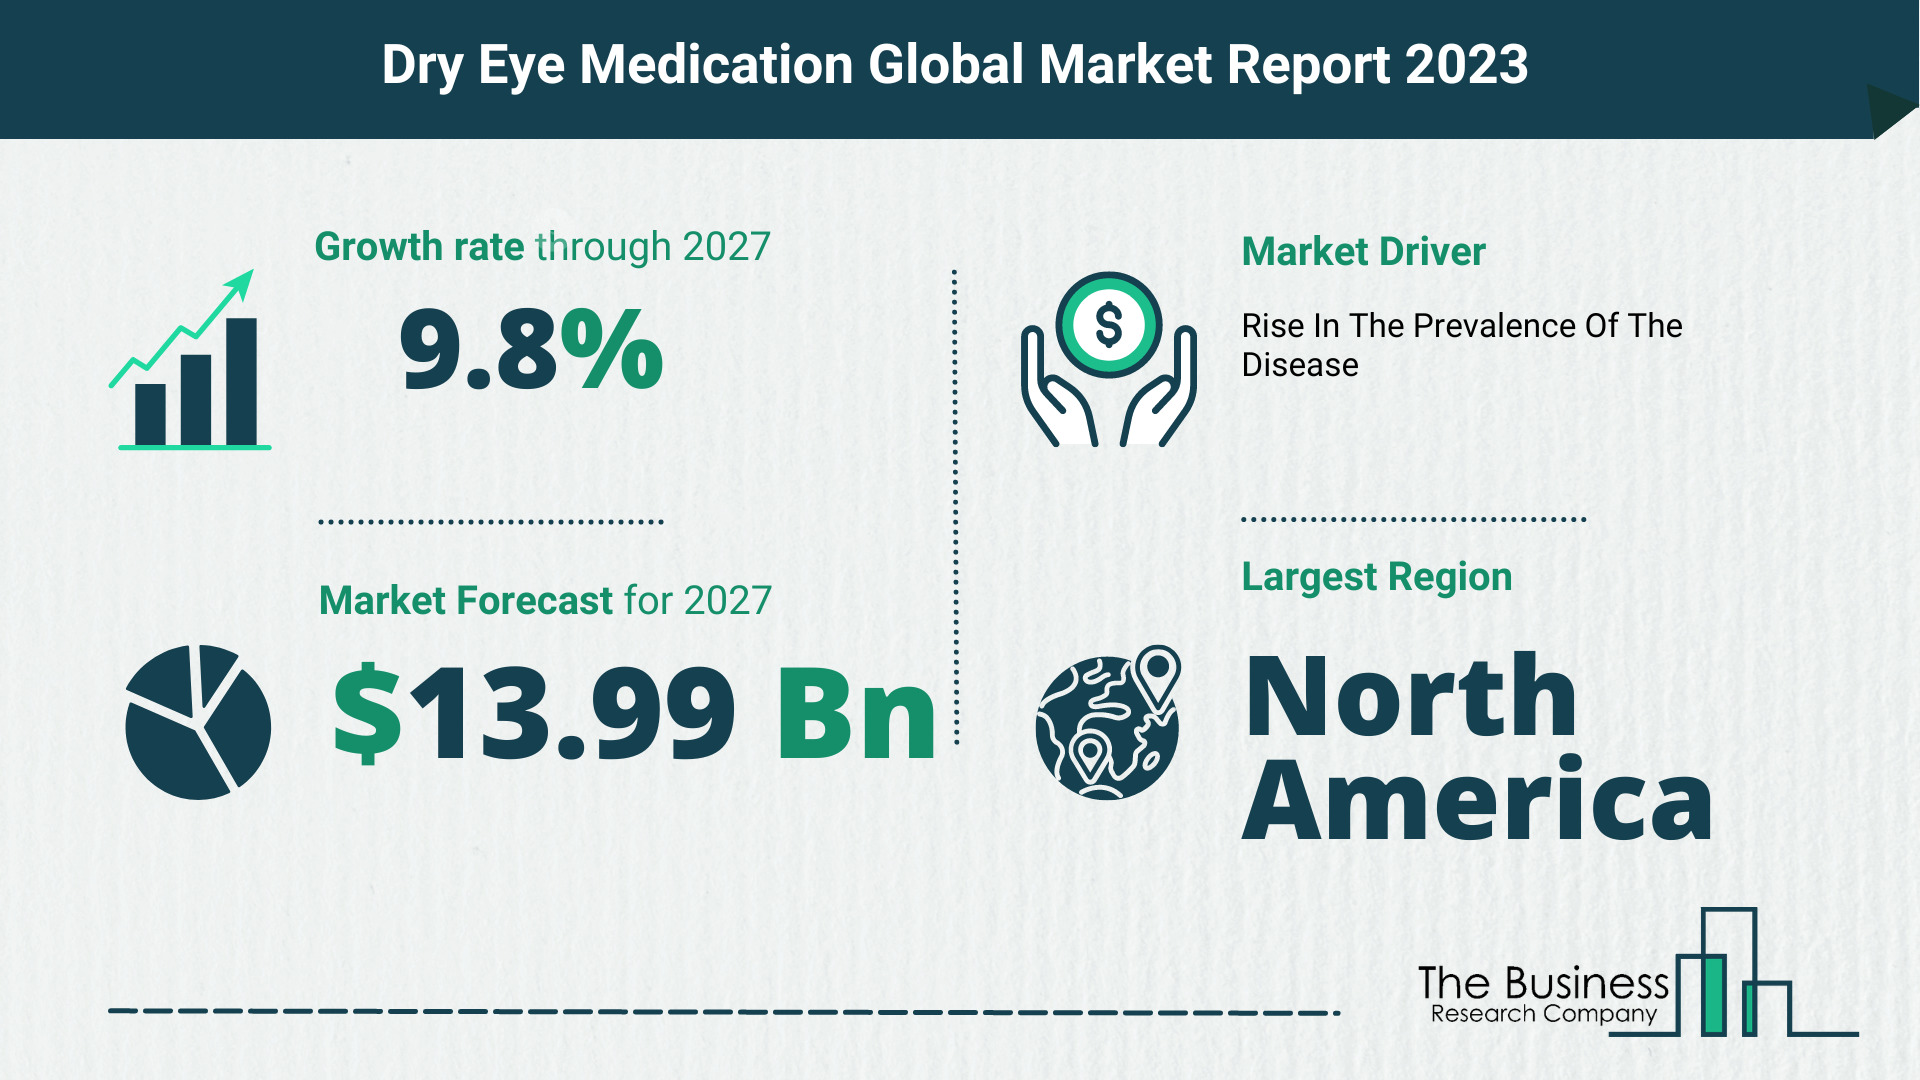 Global Dry Eye Medication Market Size